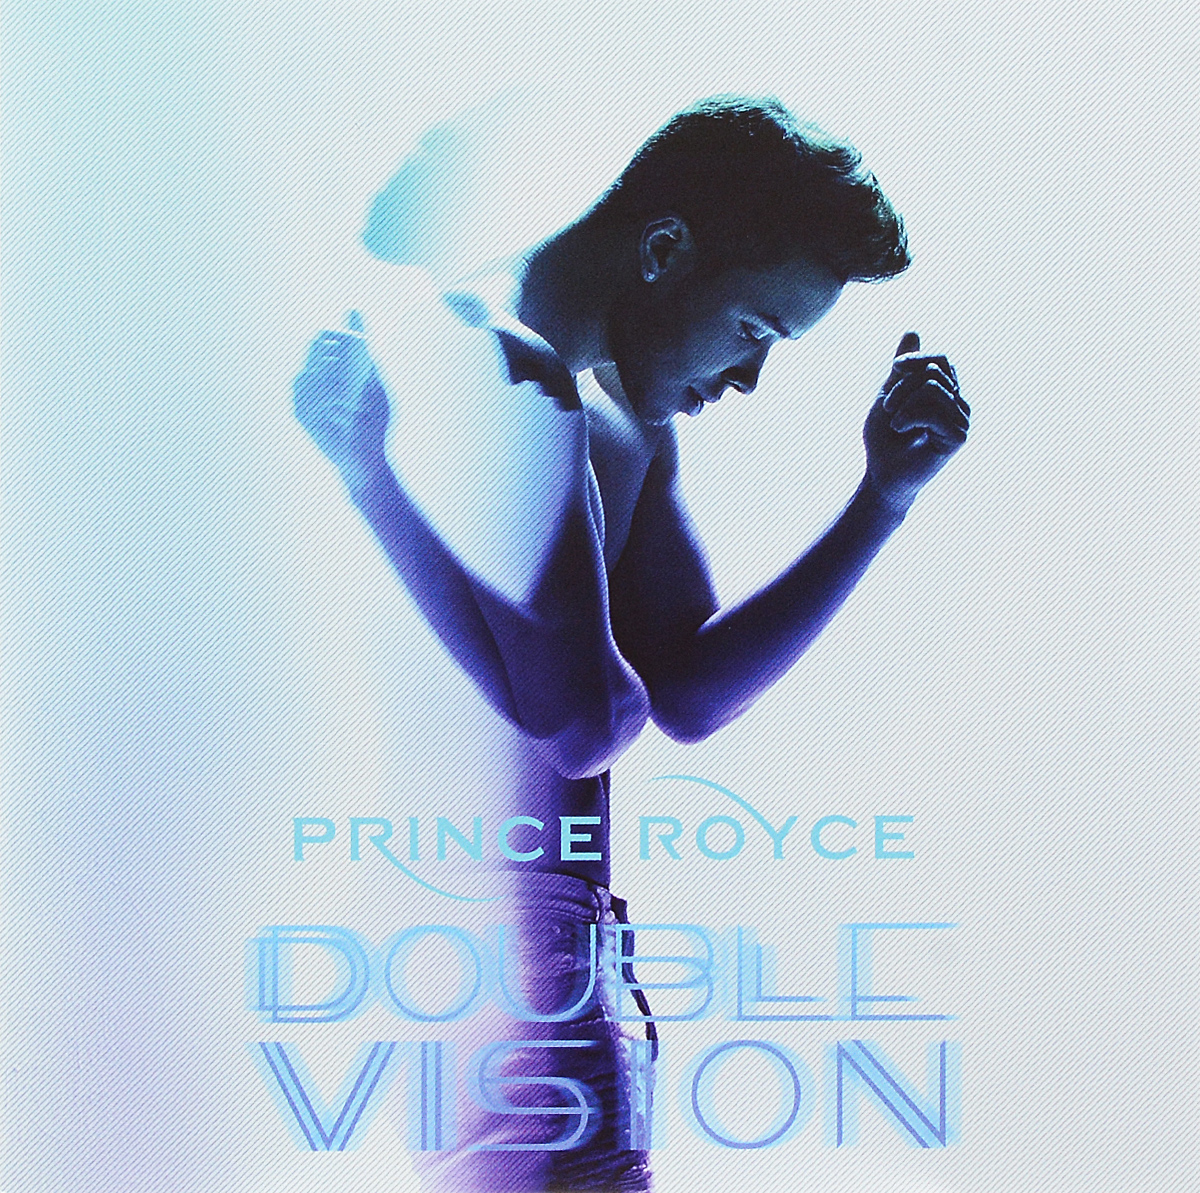 Prince Royce Prince Royce. Double Vision